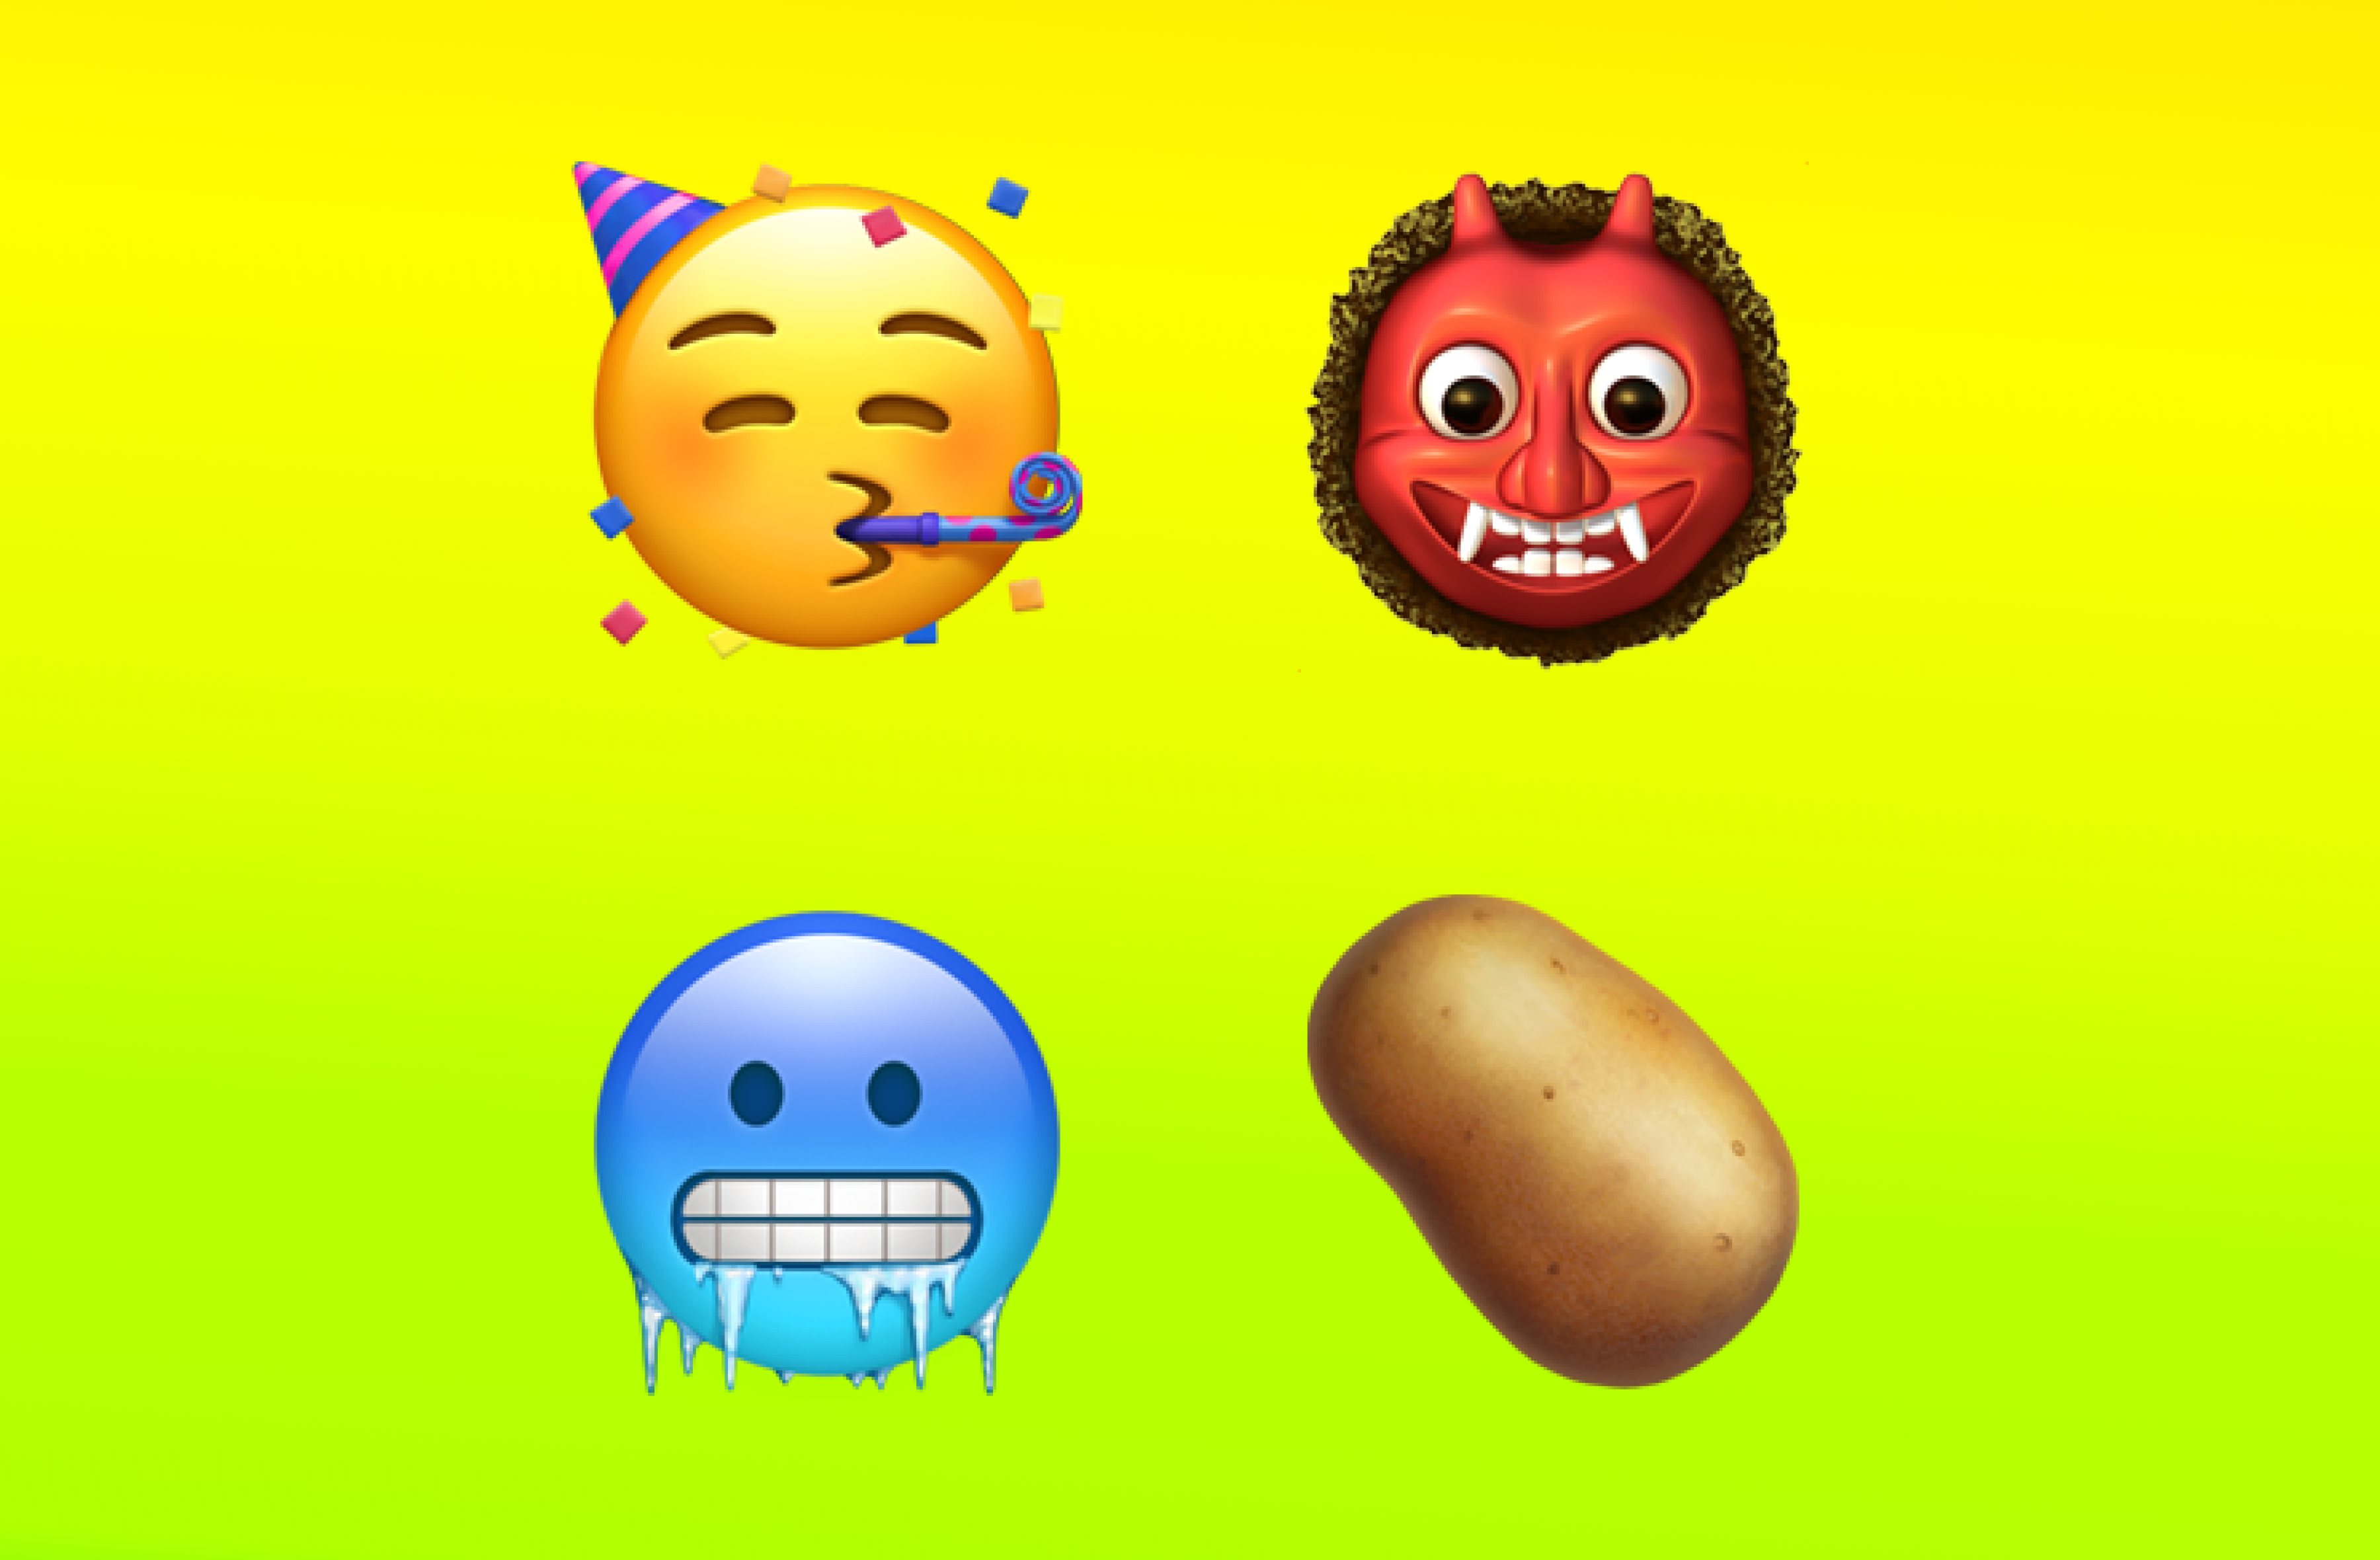 Some emojis frmo Apple's native set